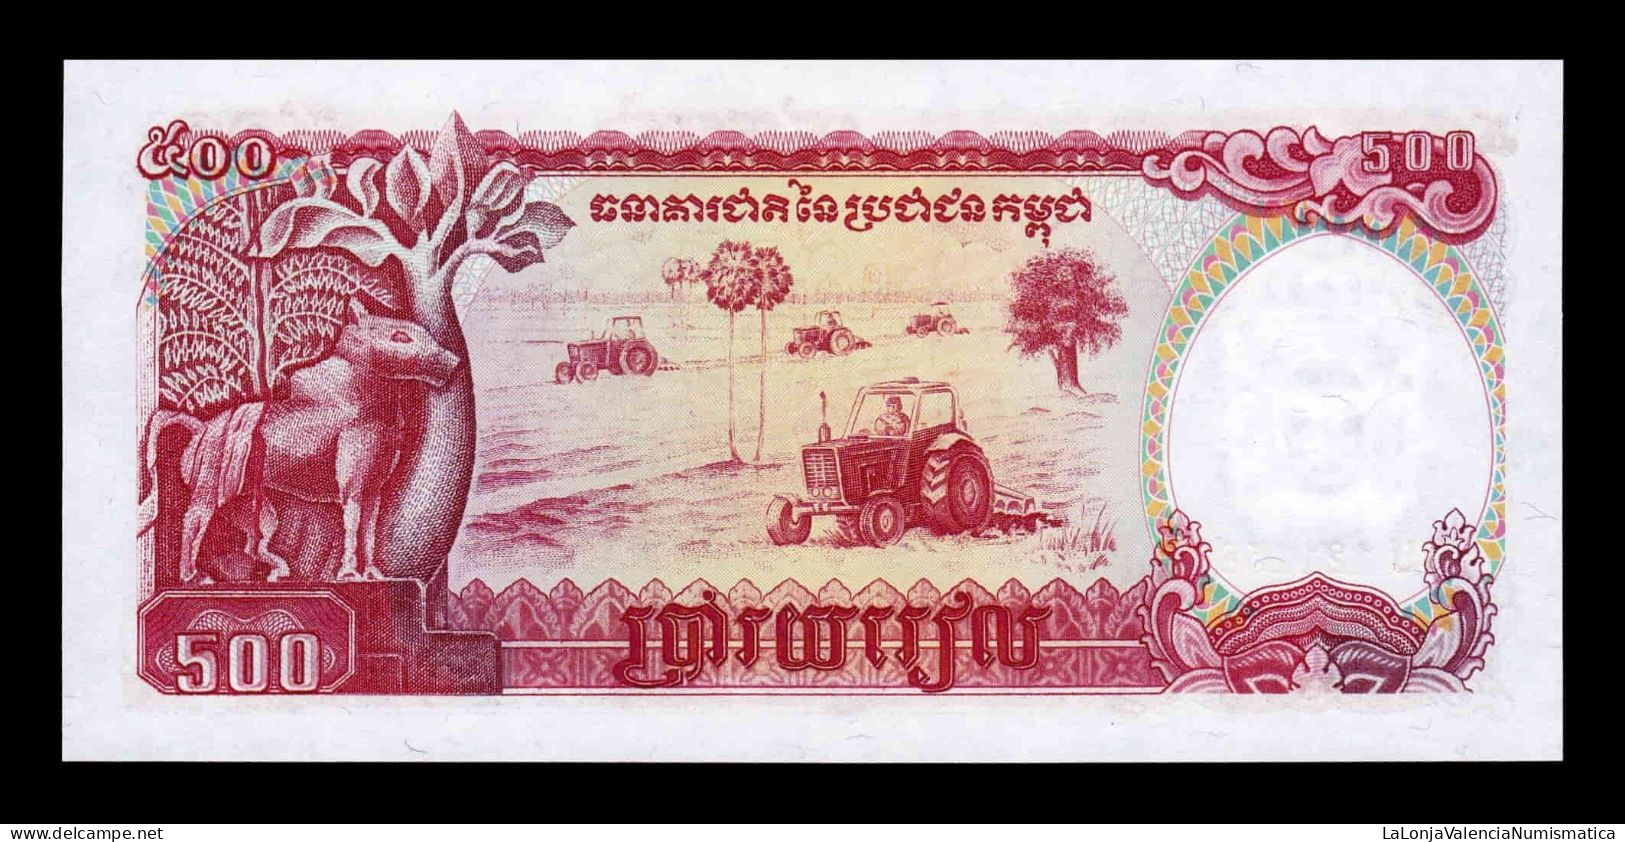 Camboya Cambodia 500 Riels 1991 Pick 38 Sc Unc - Kambodscha